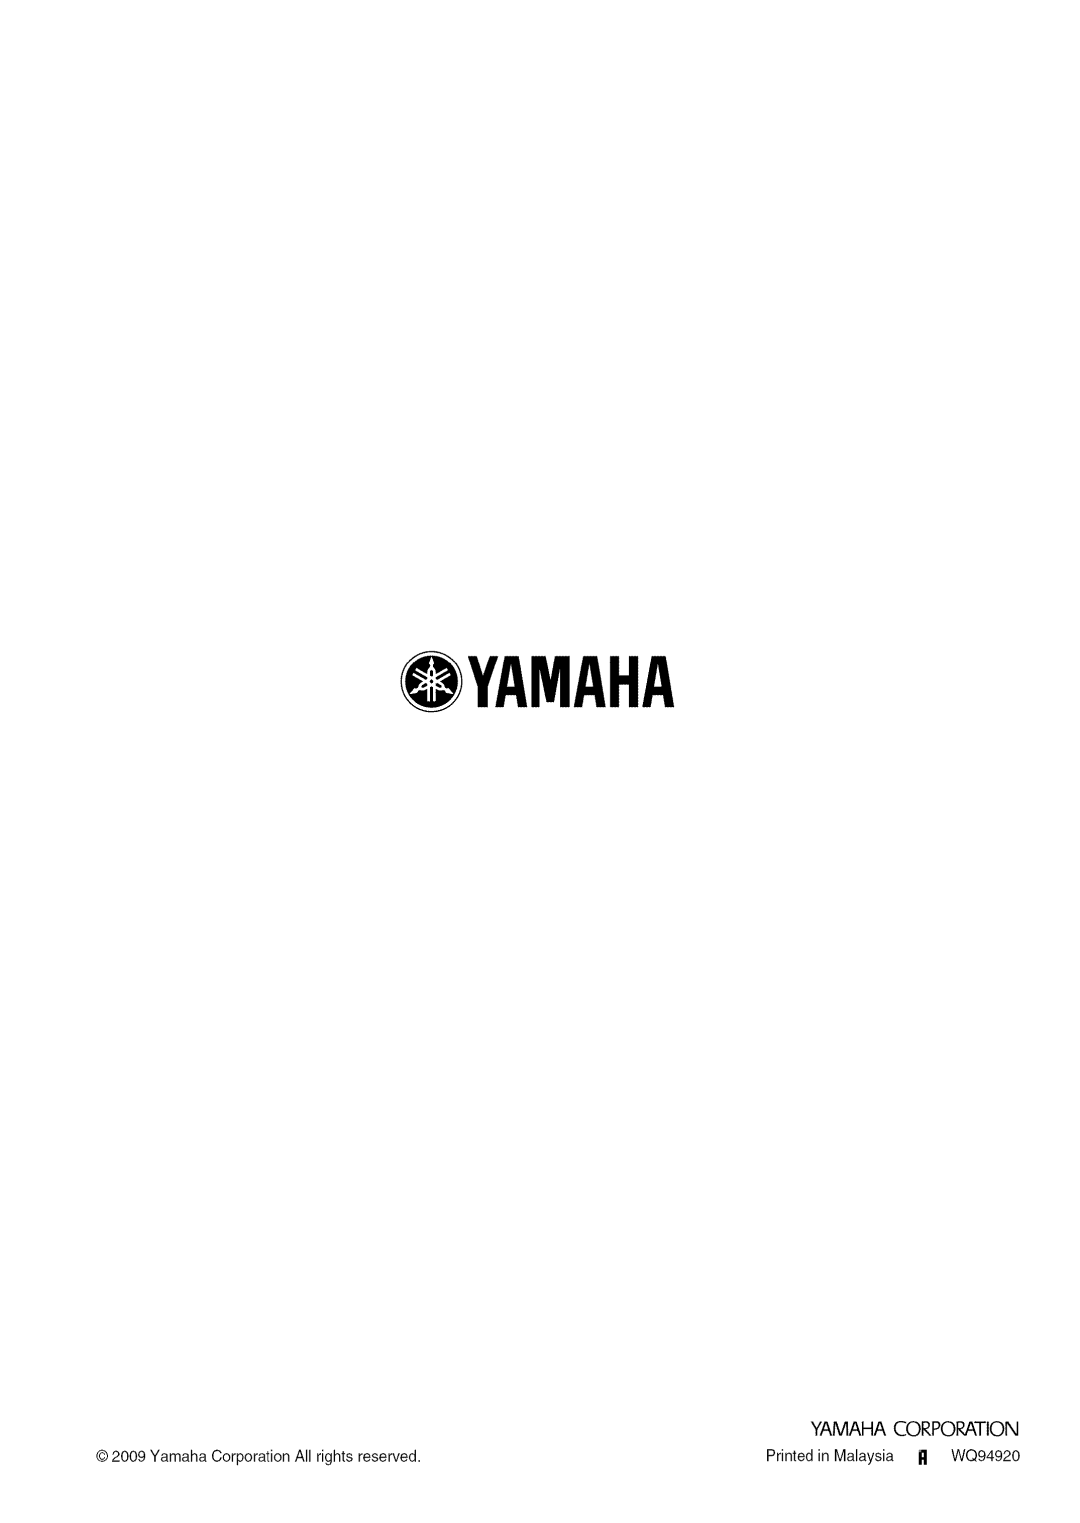 Yamaha RX-V1065 owner manual Oyamaha, Yamaha Corporation All rights reserved, Printed in Malaysia H WQ94920 